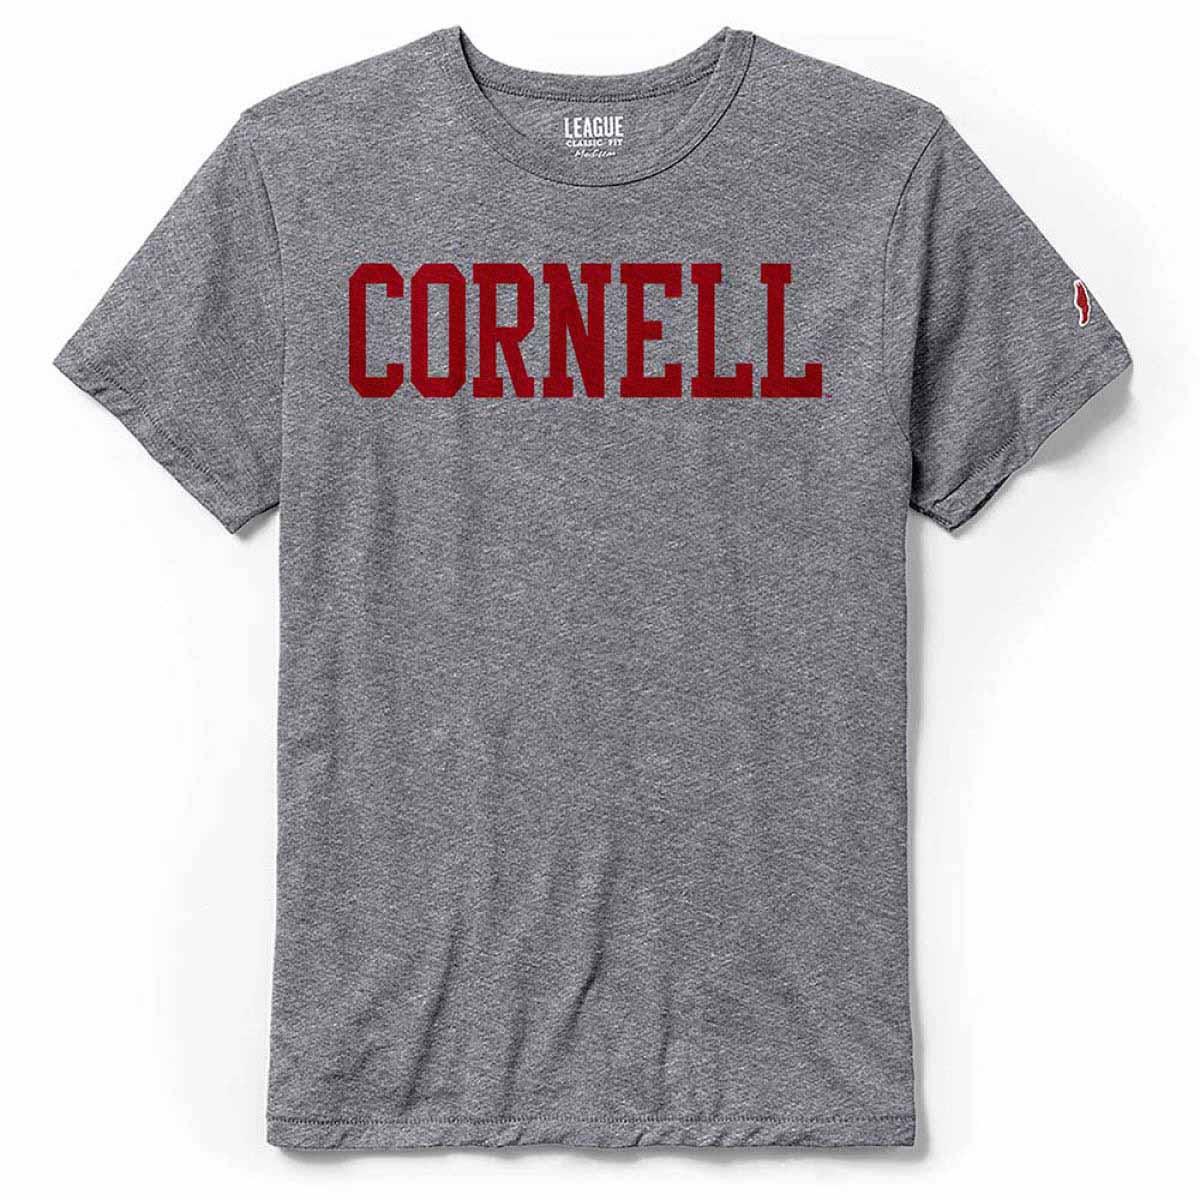 League Cornell Tee Grey